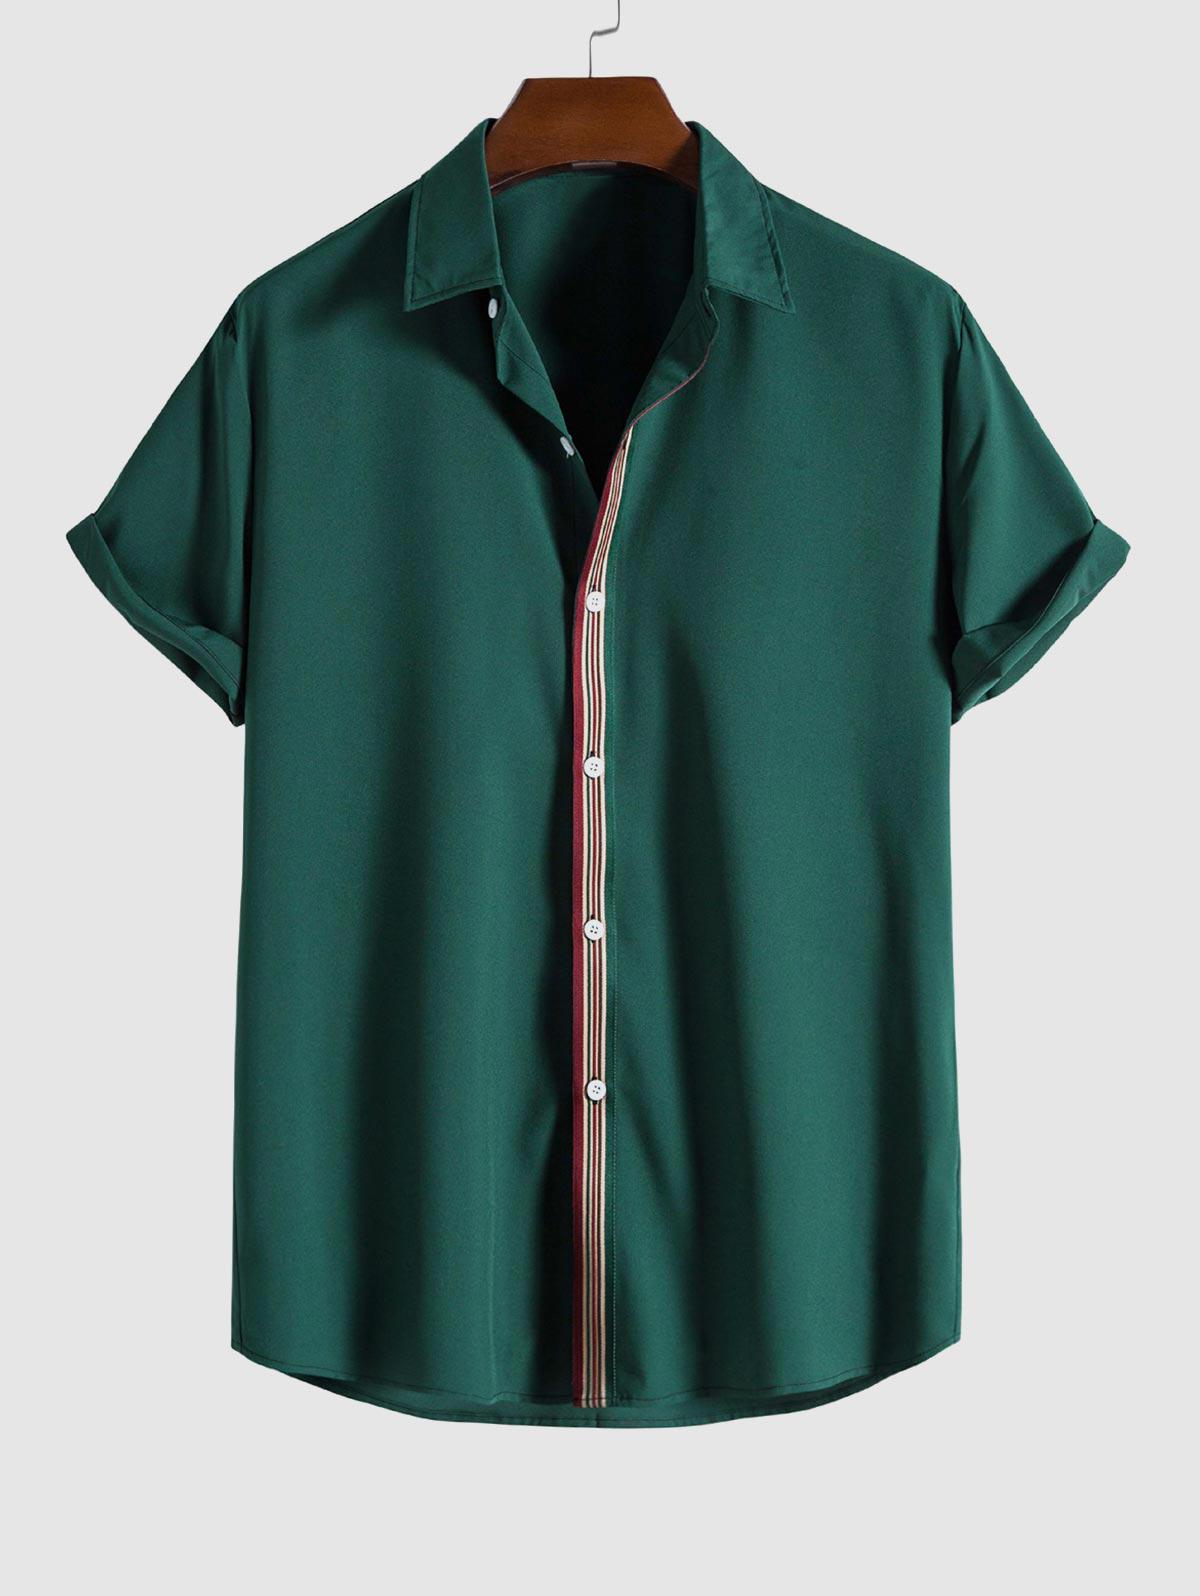 ZAFUL Men's Striped Braid Design Short Sleeves Shirt 2xl Green